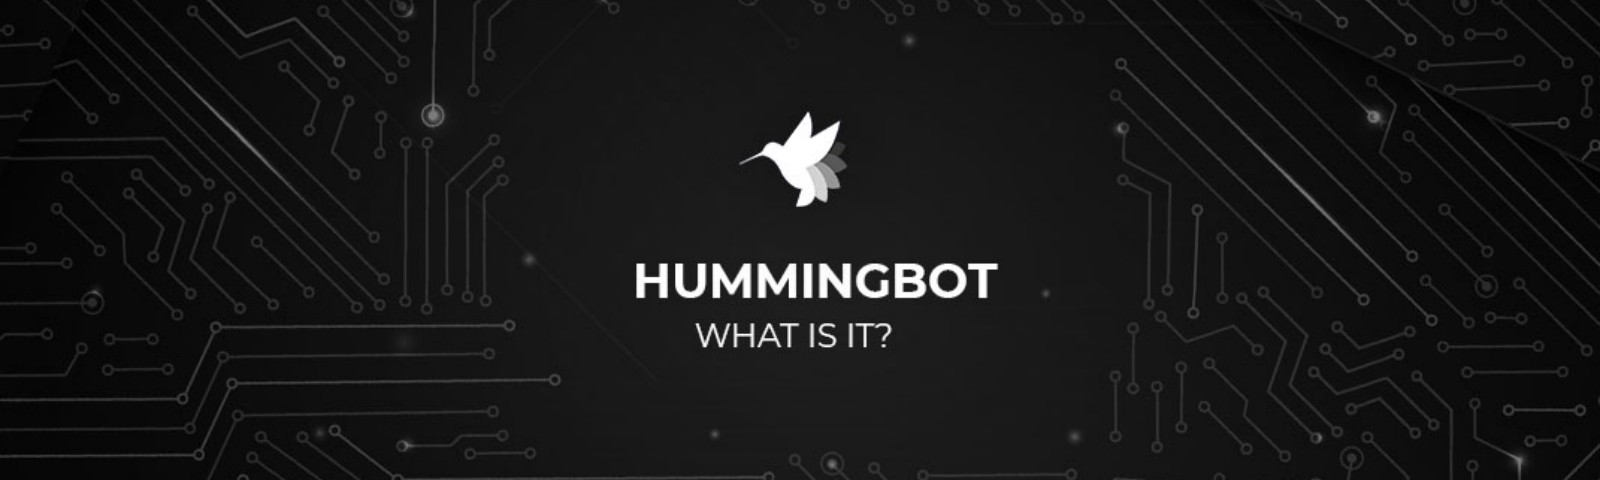 hummingbot review